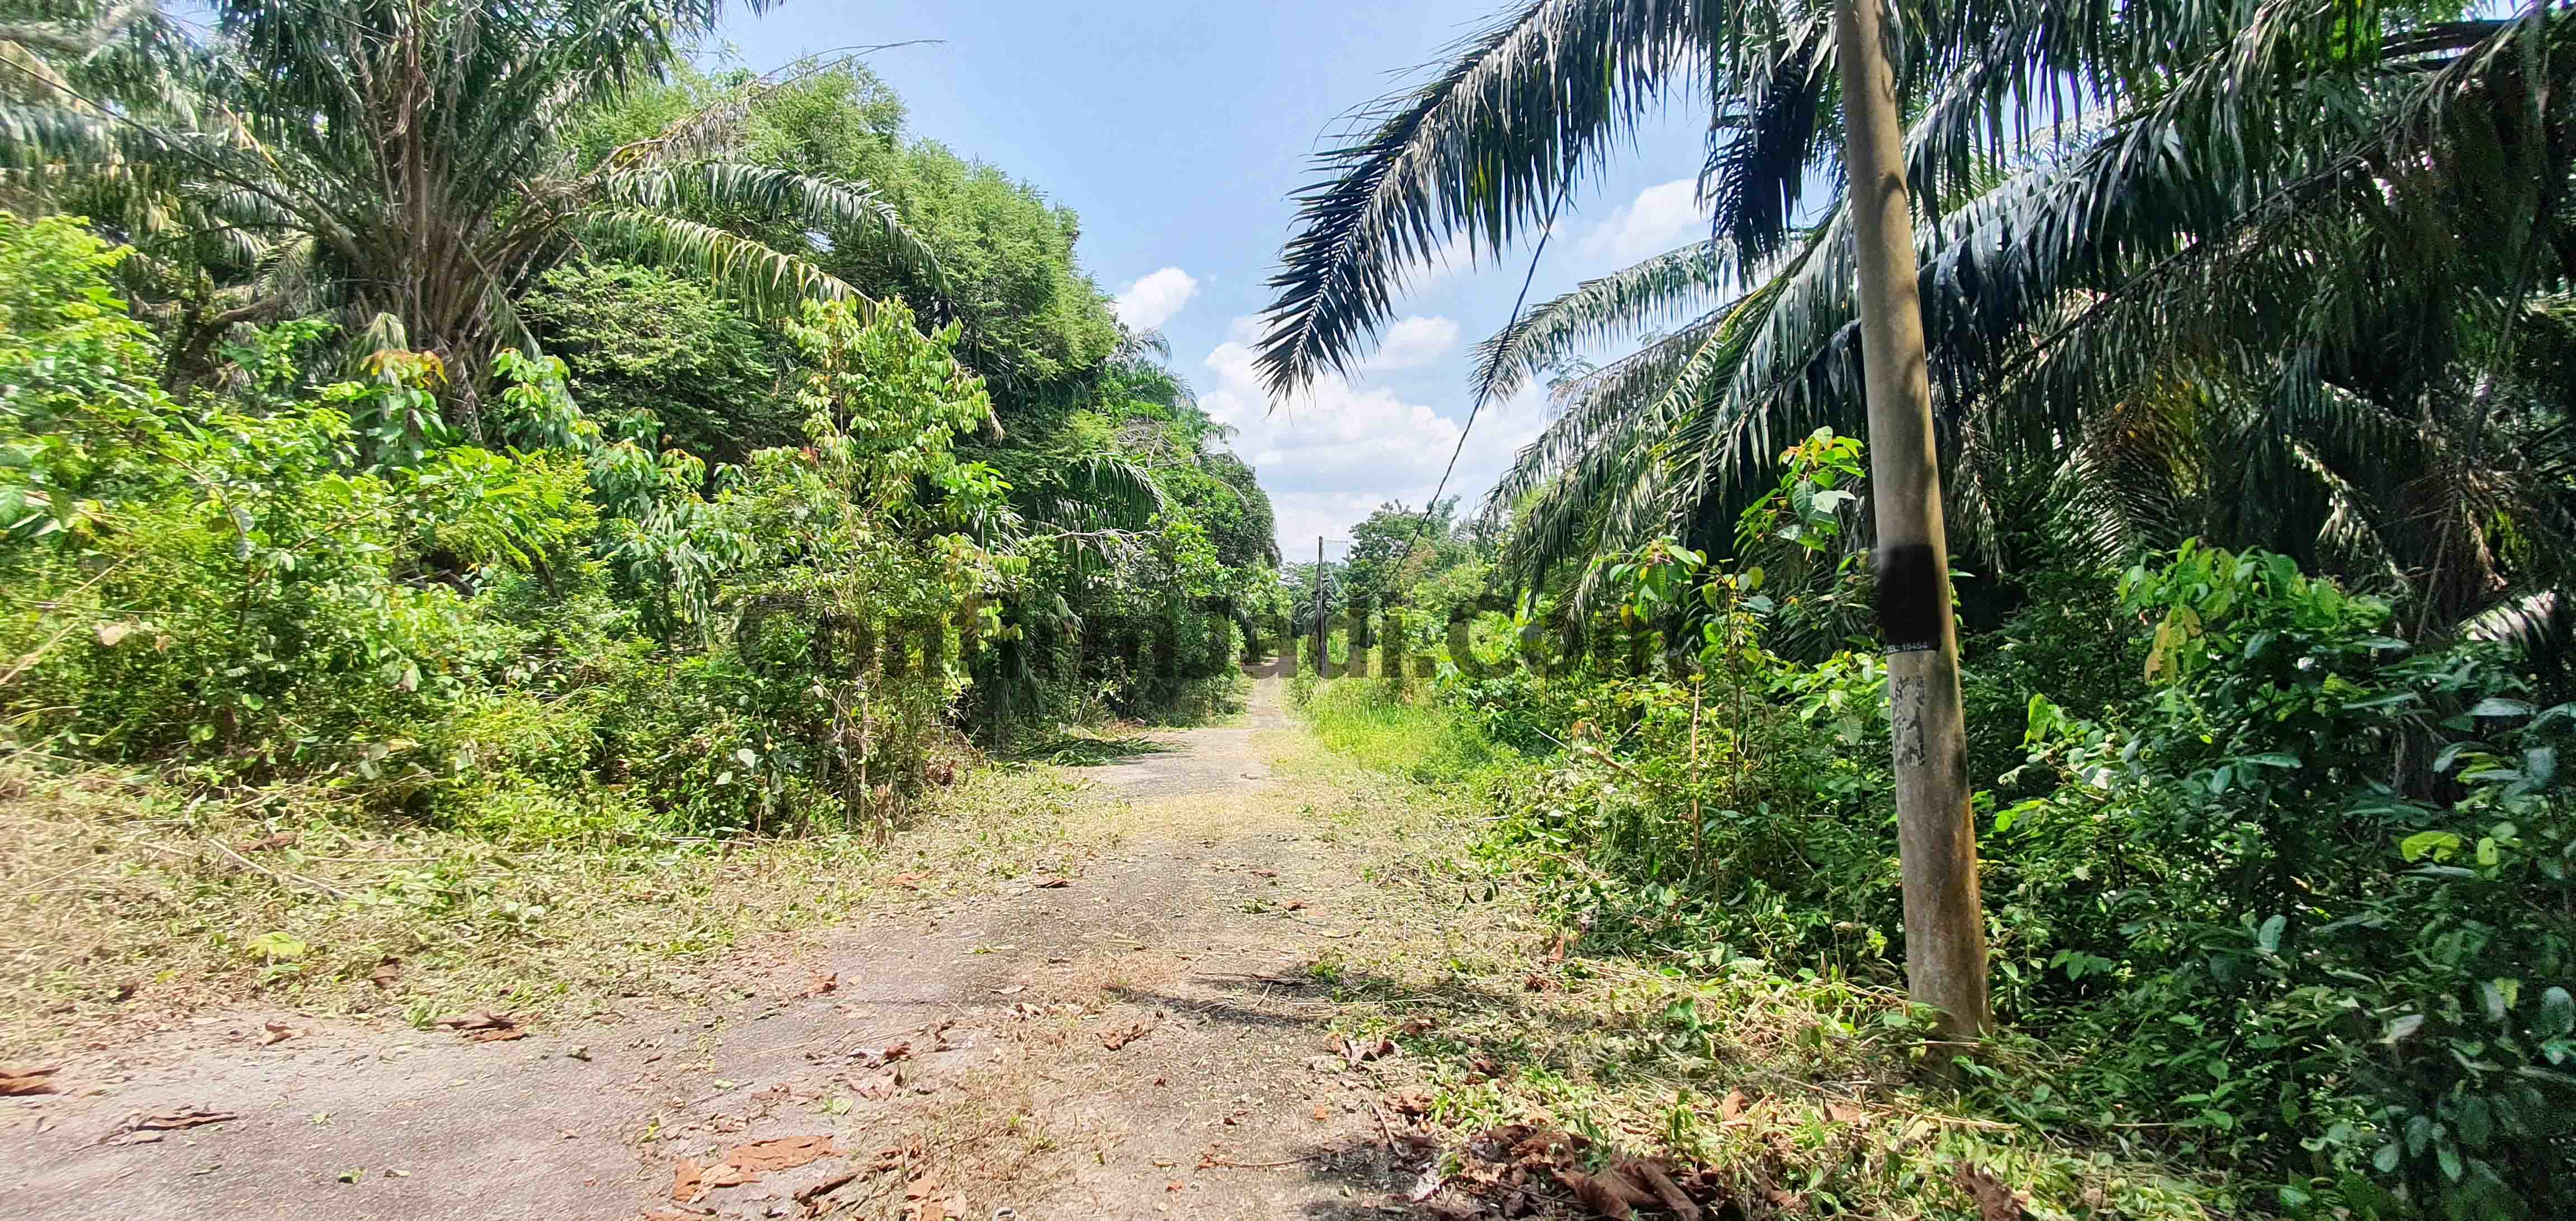 Agriculture land for sale in Negeri Sembilan | ConfirmJadi.com